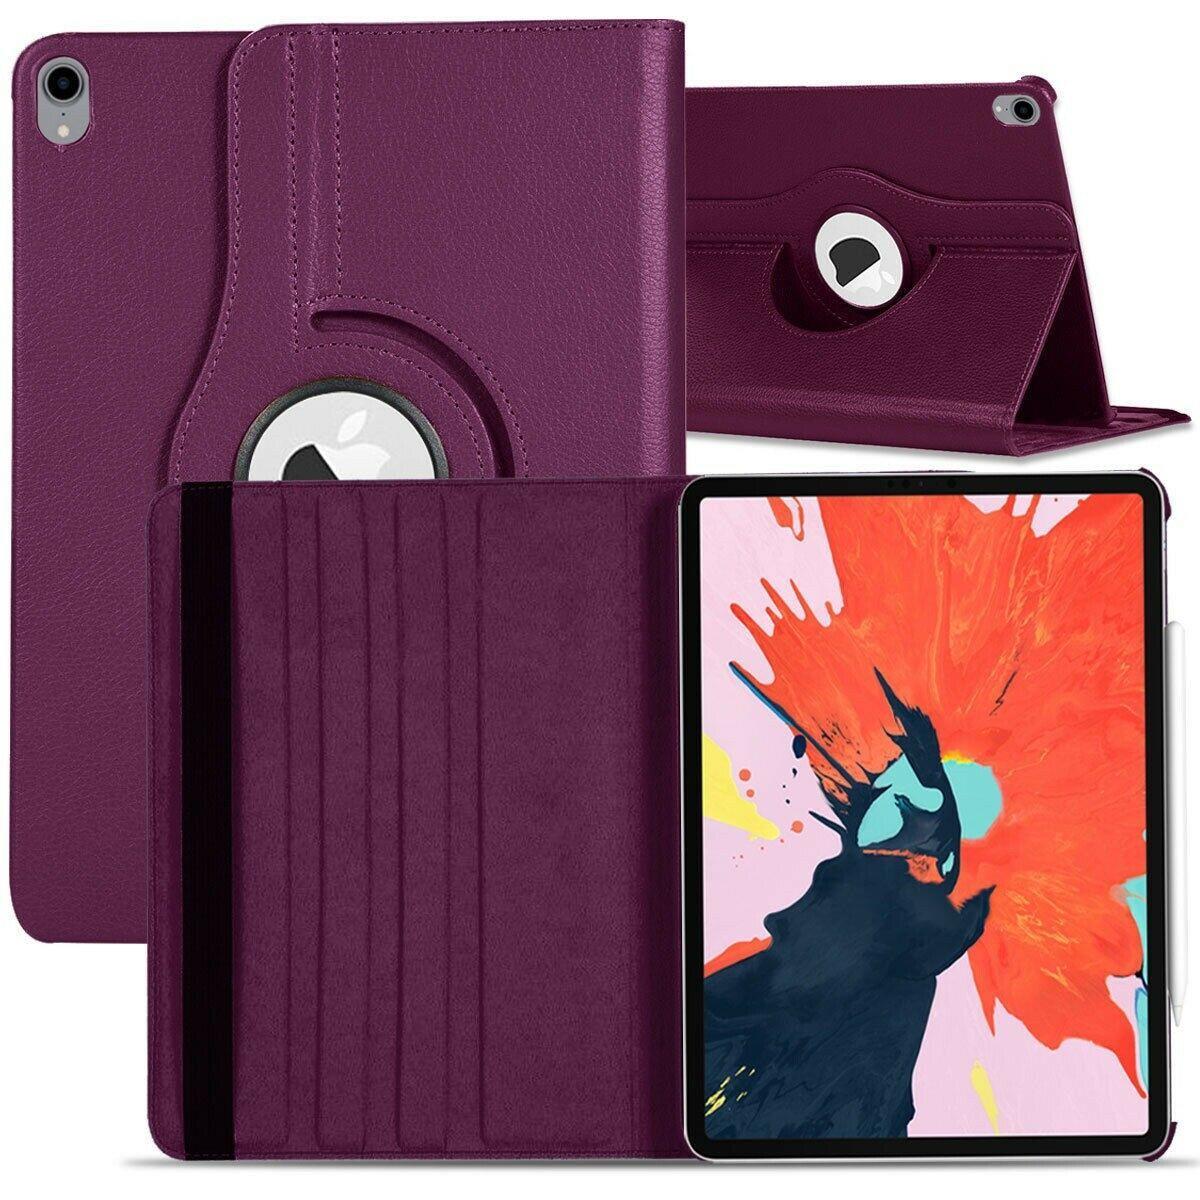 360 Rotate Leather Case Cover Apple iPad Air 2-Purple